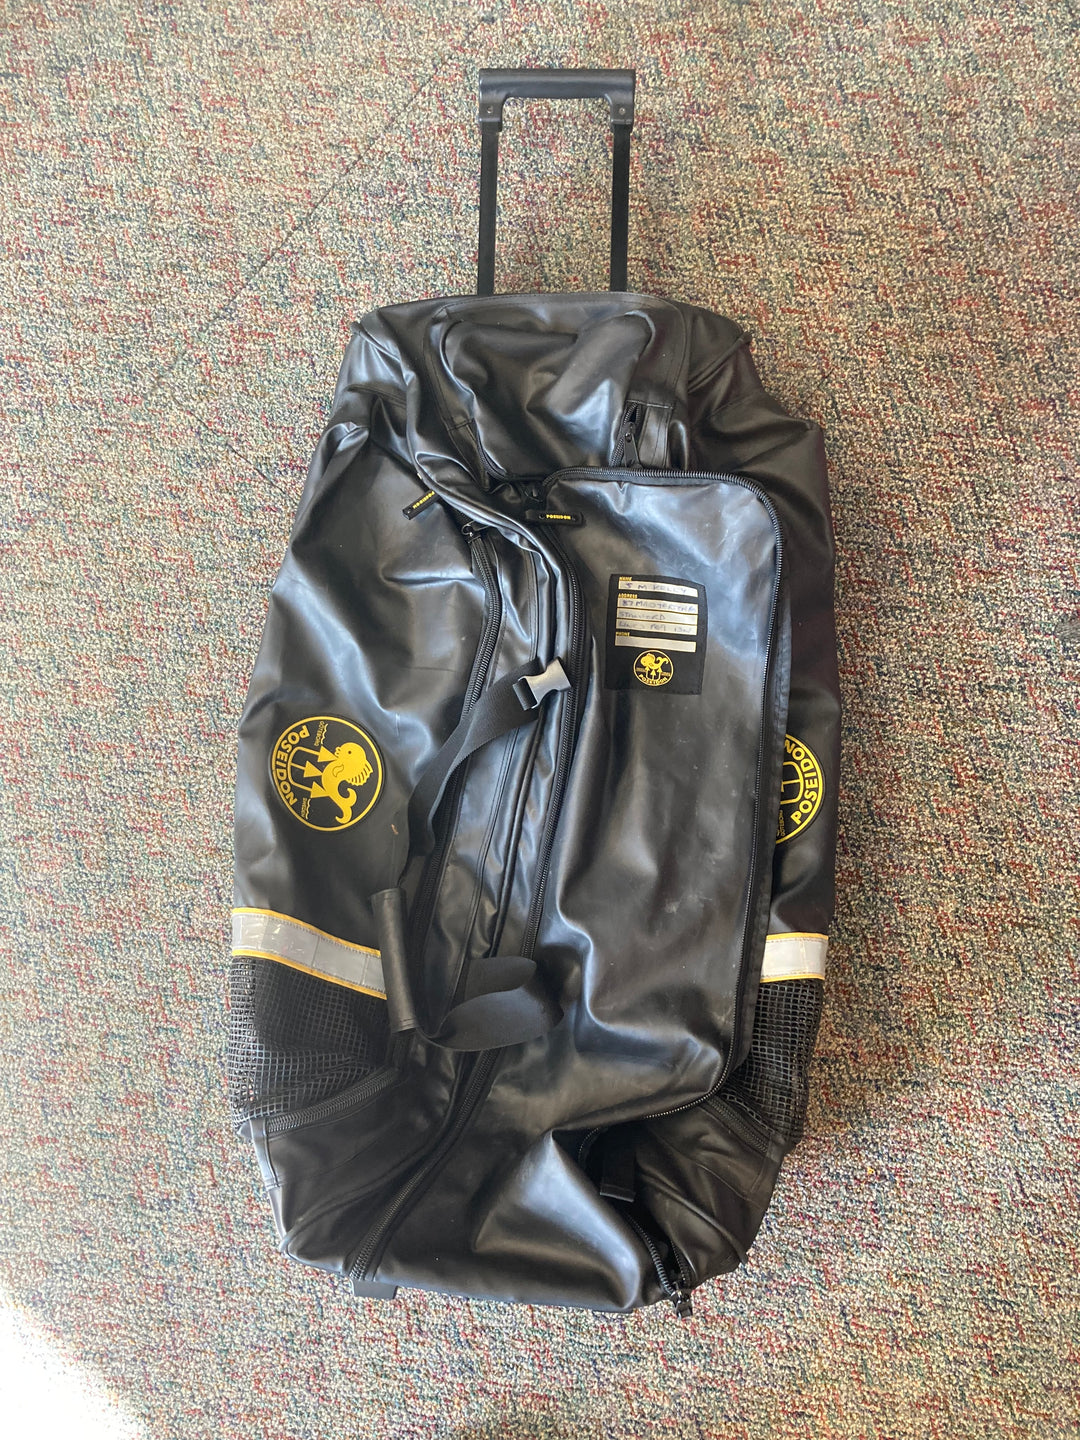 Poseidon Roller Luggage Bag : Secondhand